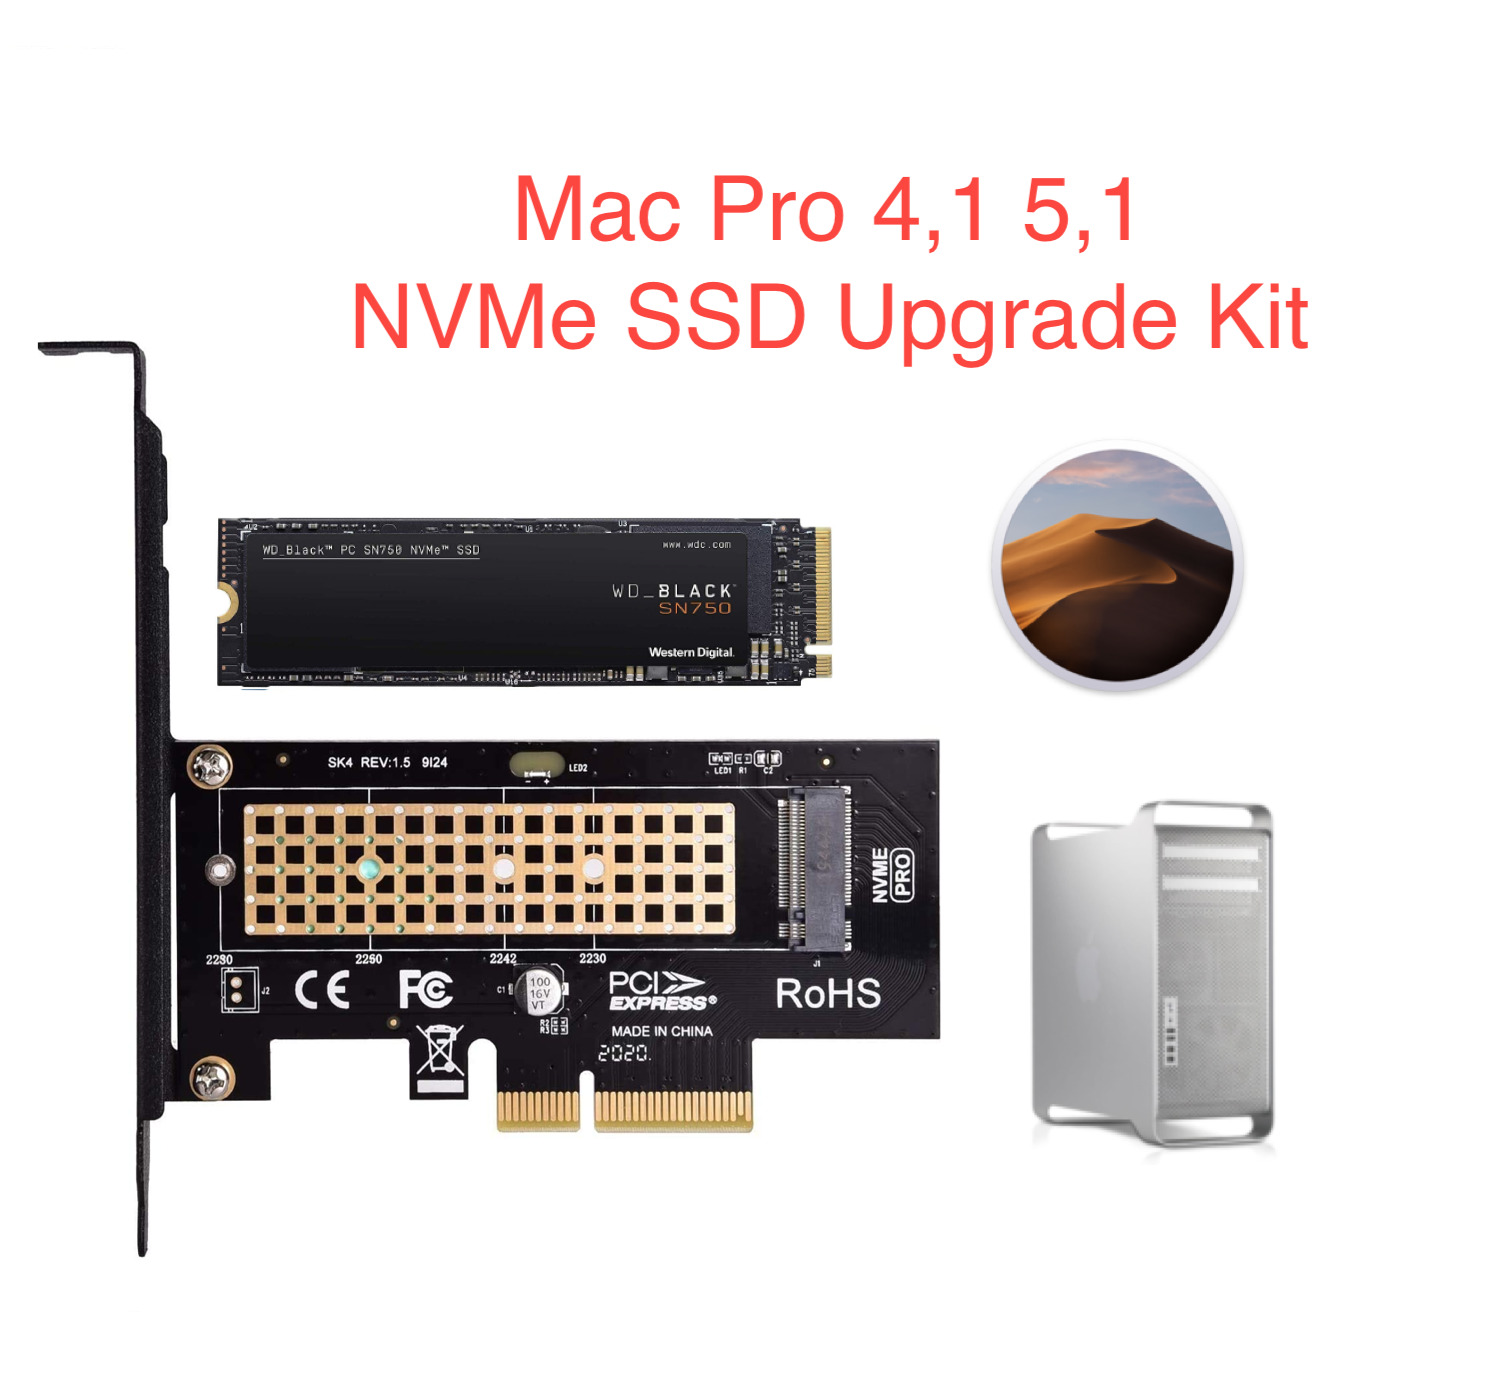 WD Black 2TB NVMe SSD Mac Pro 4,1 5,1 2009 2010 2012 Upgrade Kit